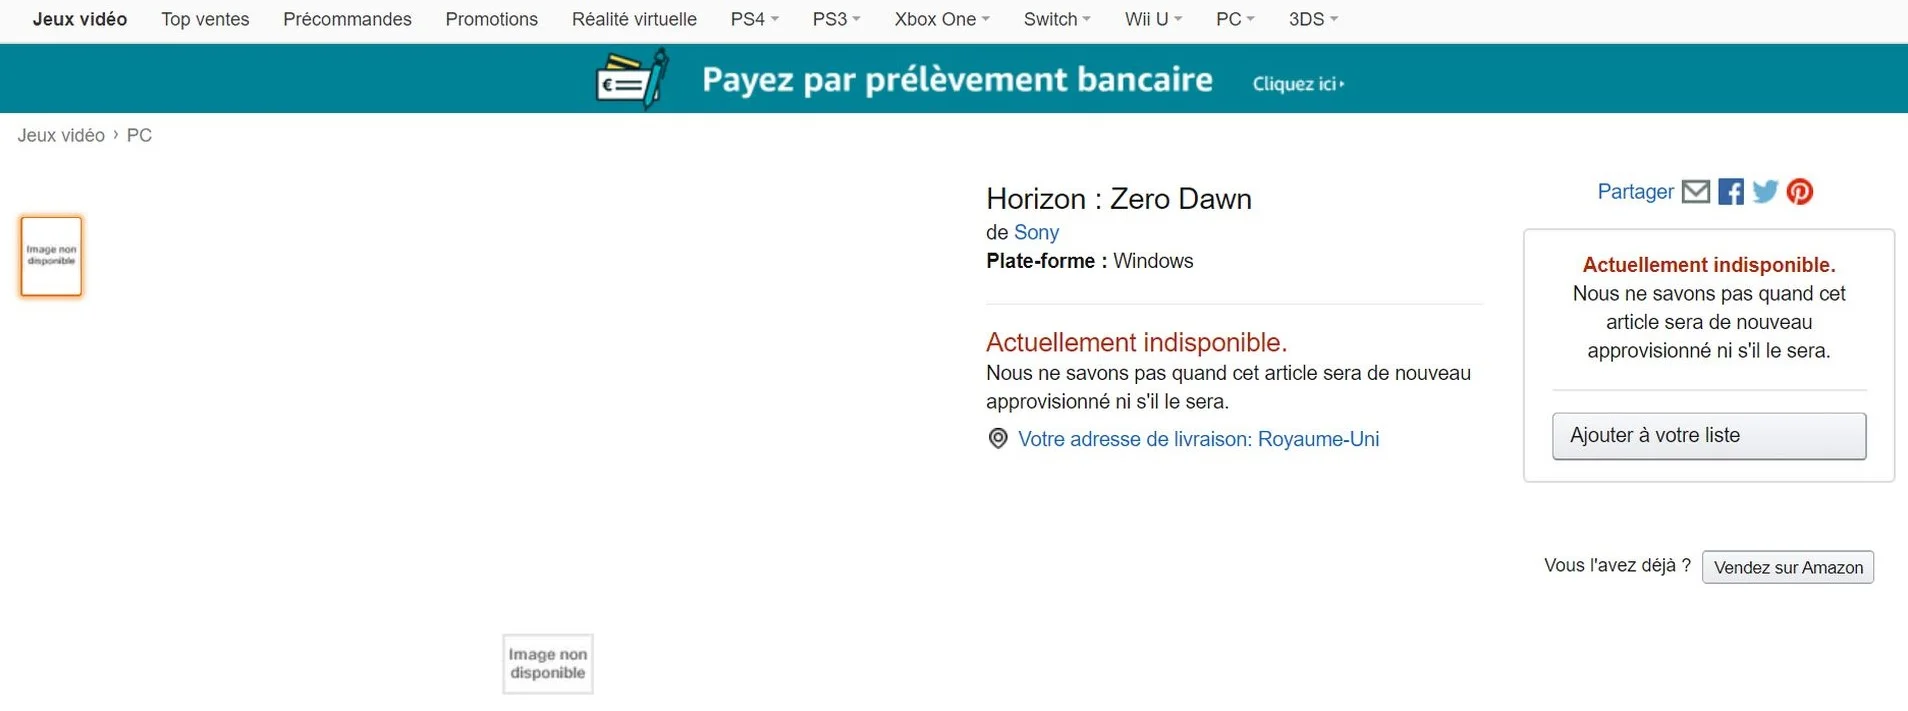 ПК-версия Horizon Zero Dawn появилась на Amazon - фото 1